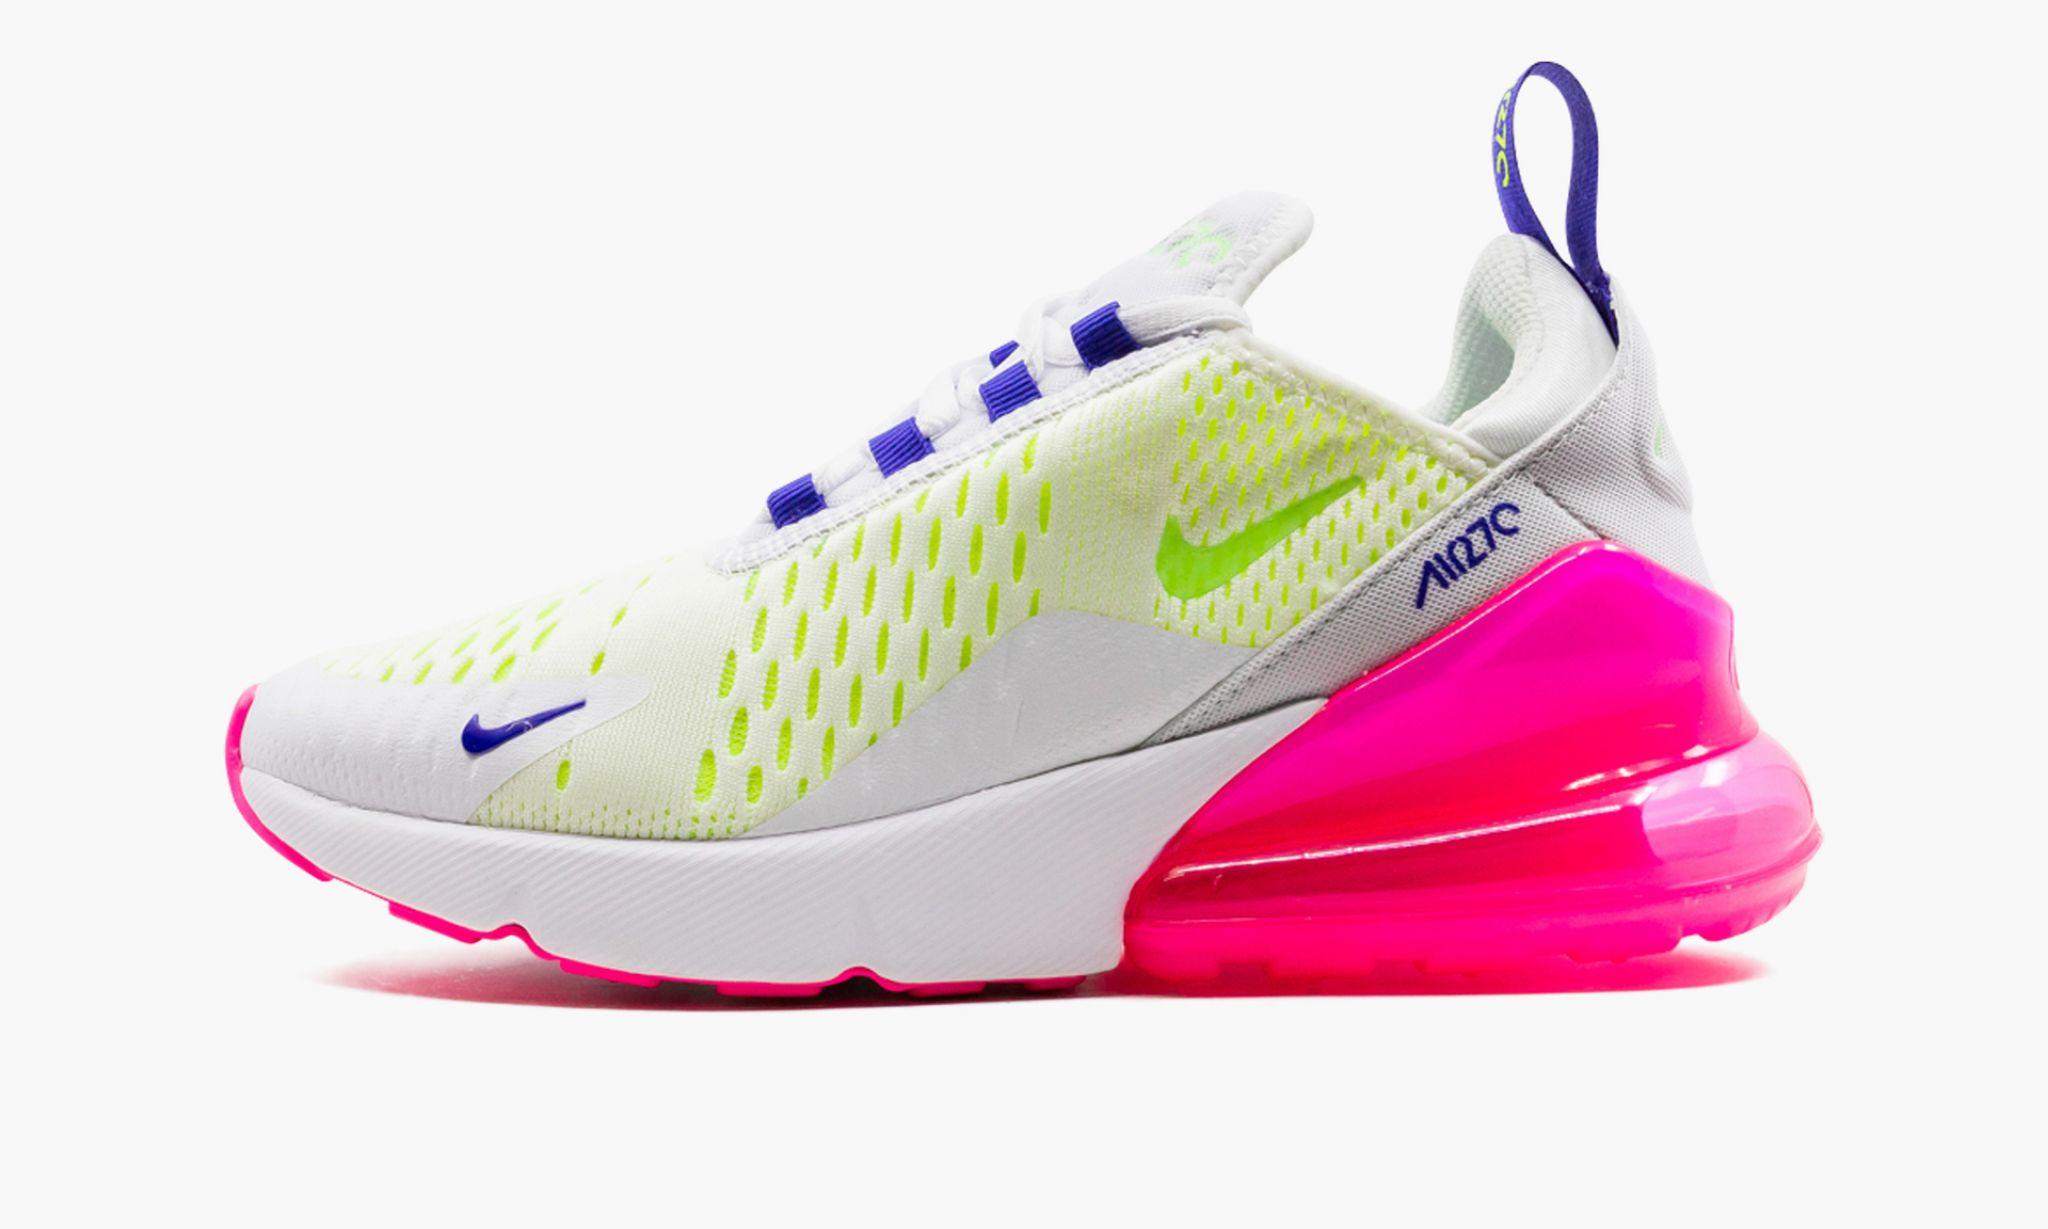 Nike nike air tennis shoes womens Rubber Air Max 270 "white / Pink Blast / Volt" Shoes | Lyst